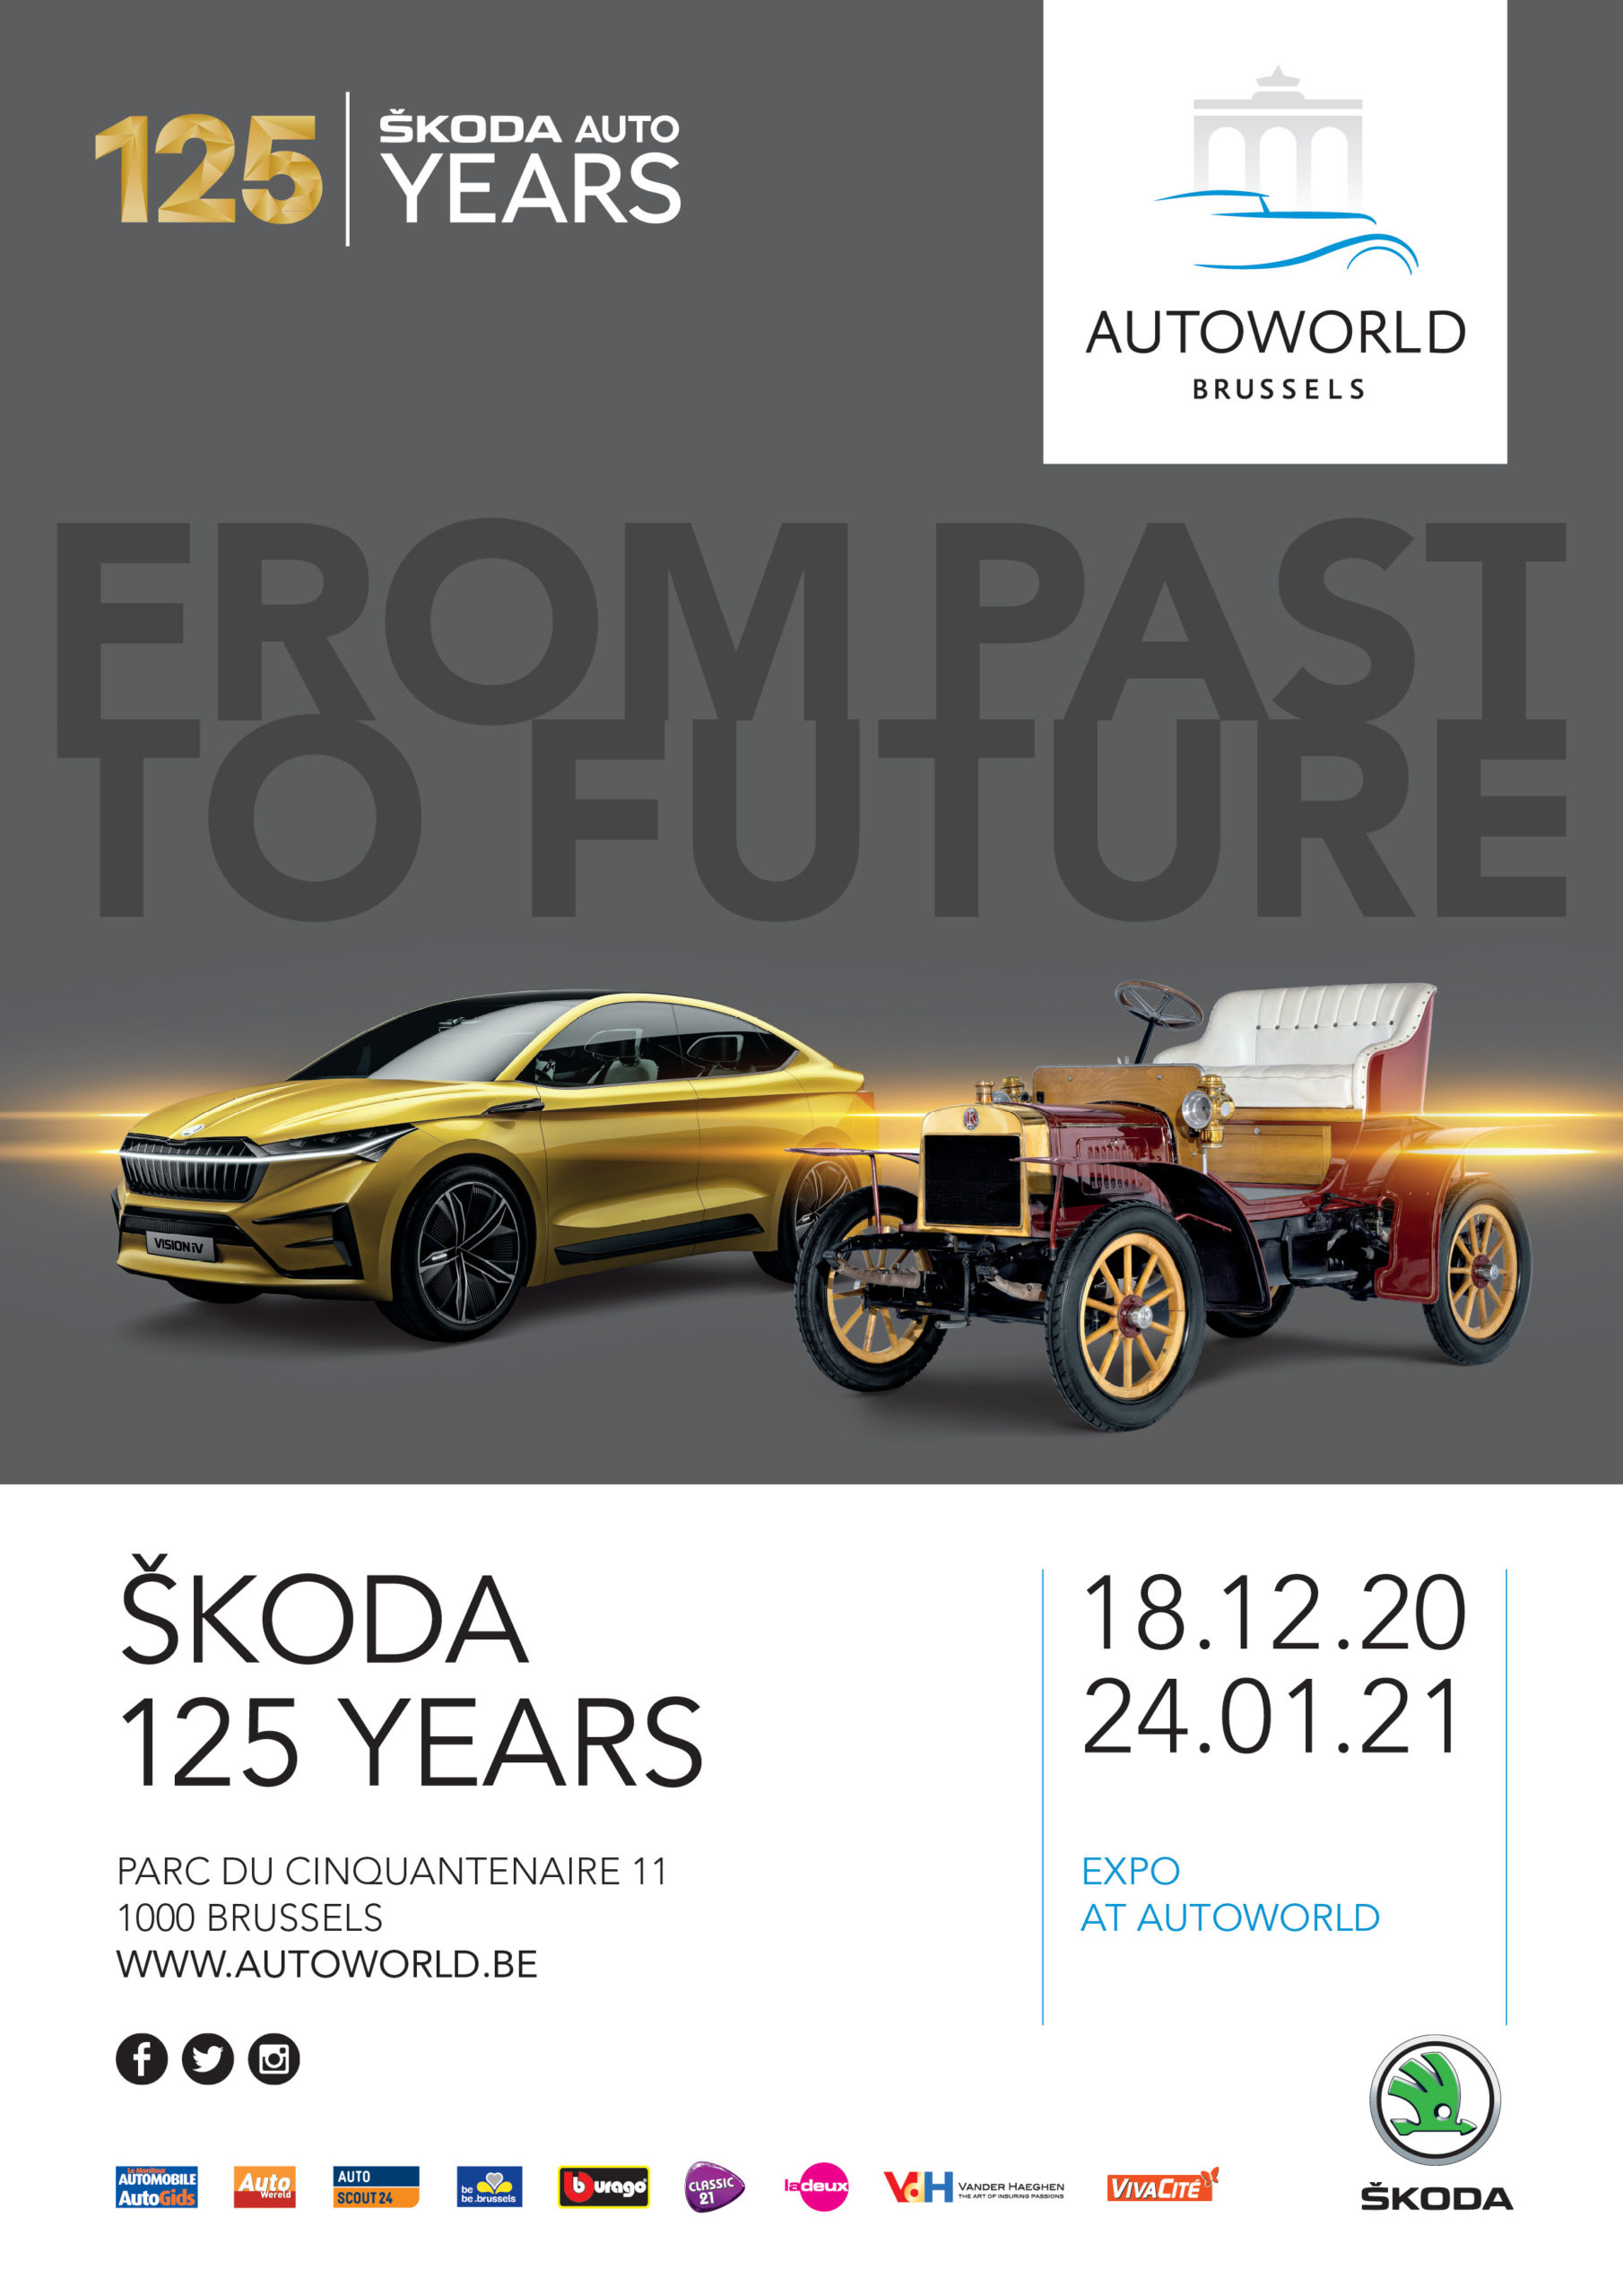 Autoworld – Expo ŠKODA 125 Years – From past to future